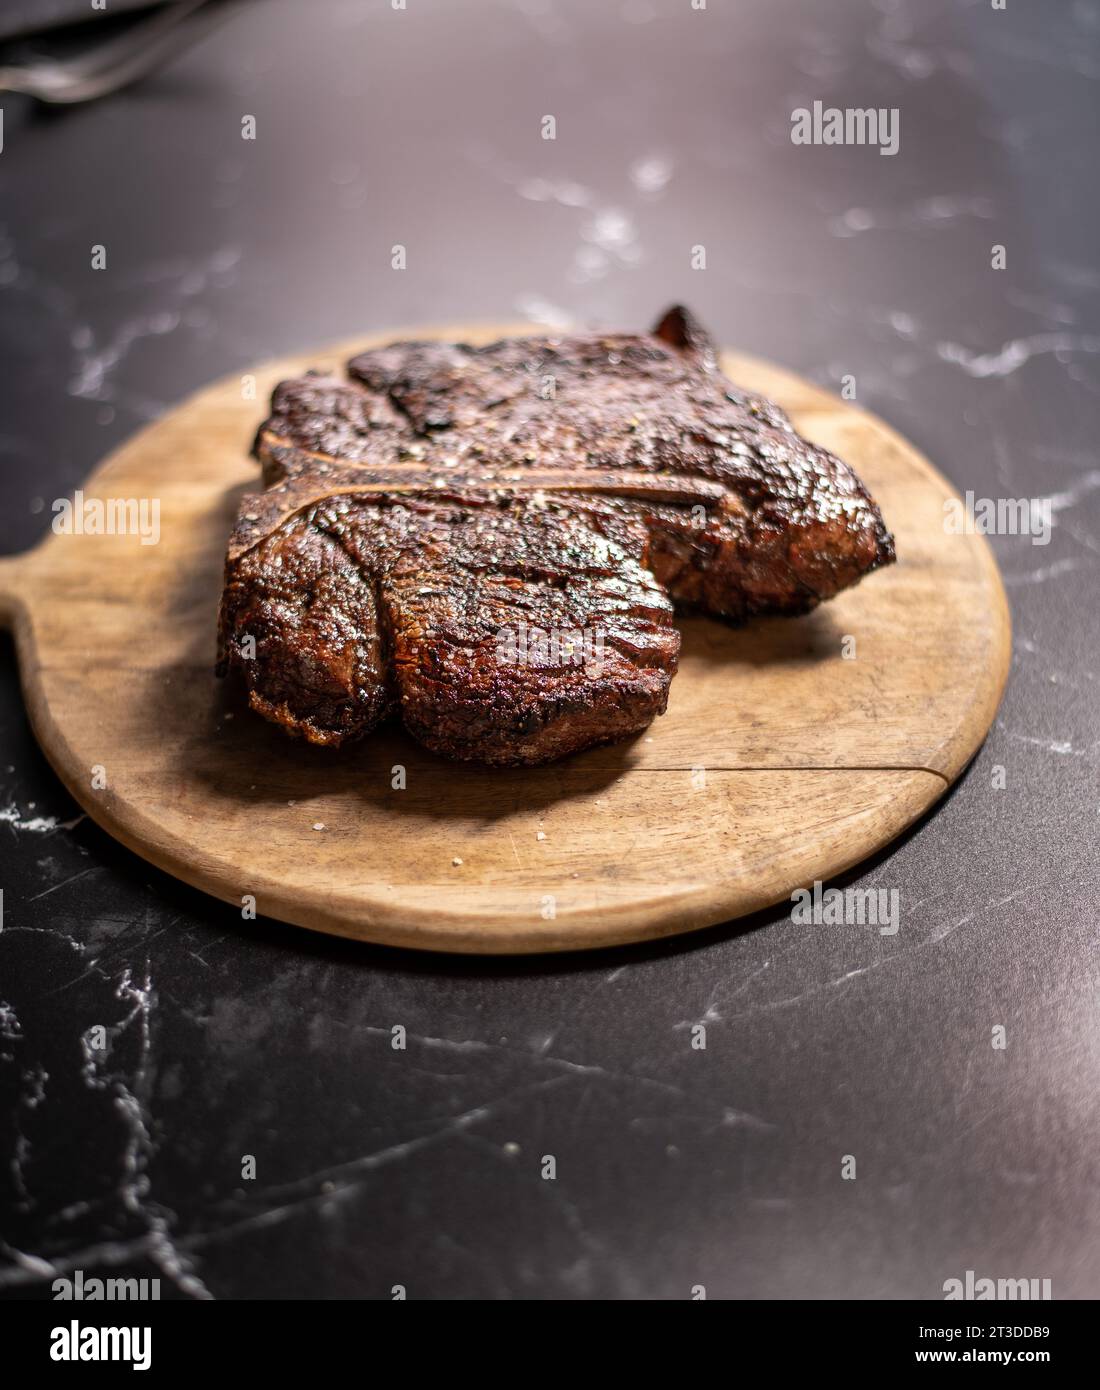 Sizzlling Portehouse steak on a wood board Stock Photo